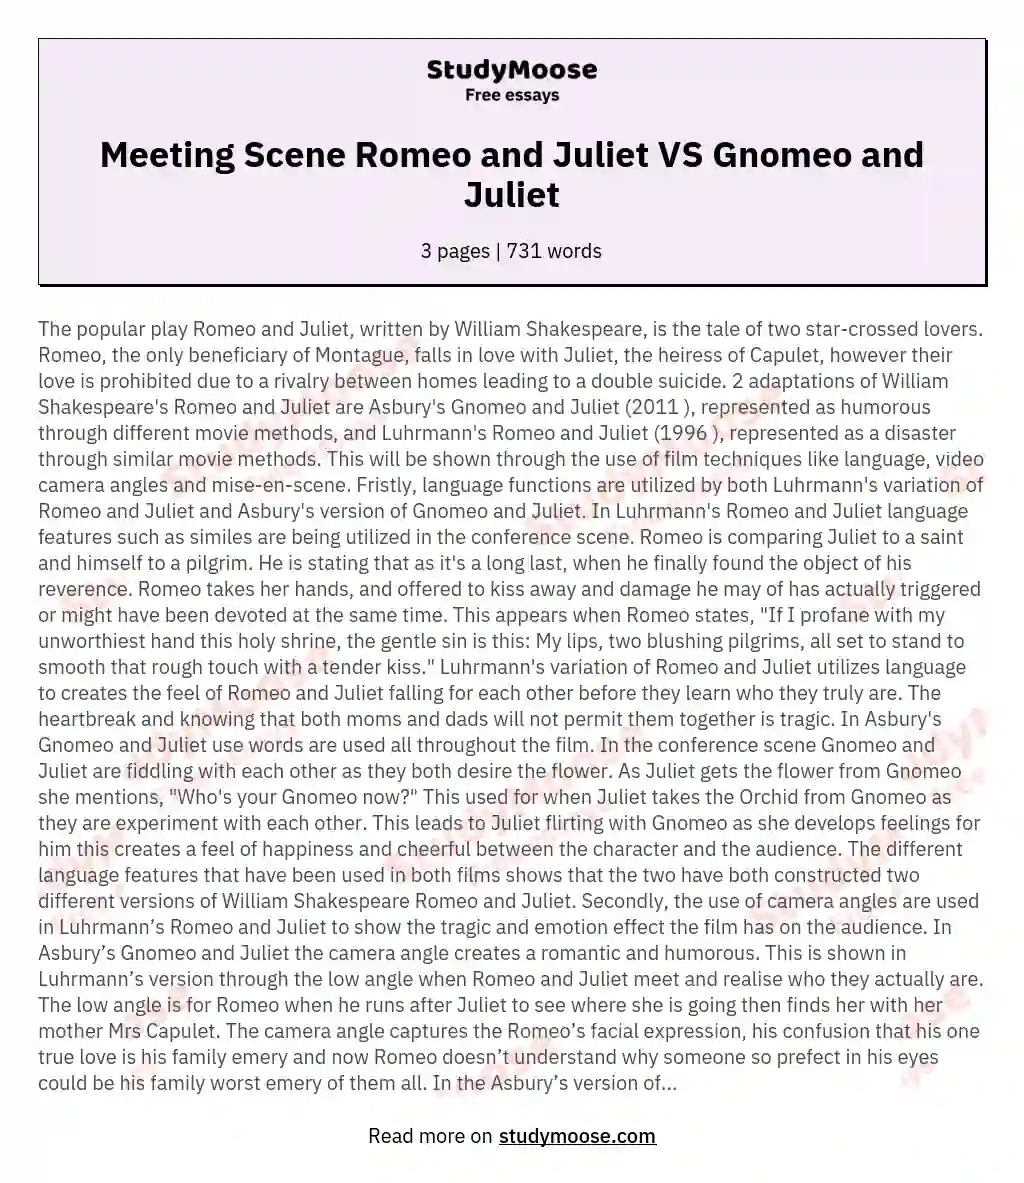 Meeting Scene Romeo and Juliet VS Gnomeo and Juliet